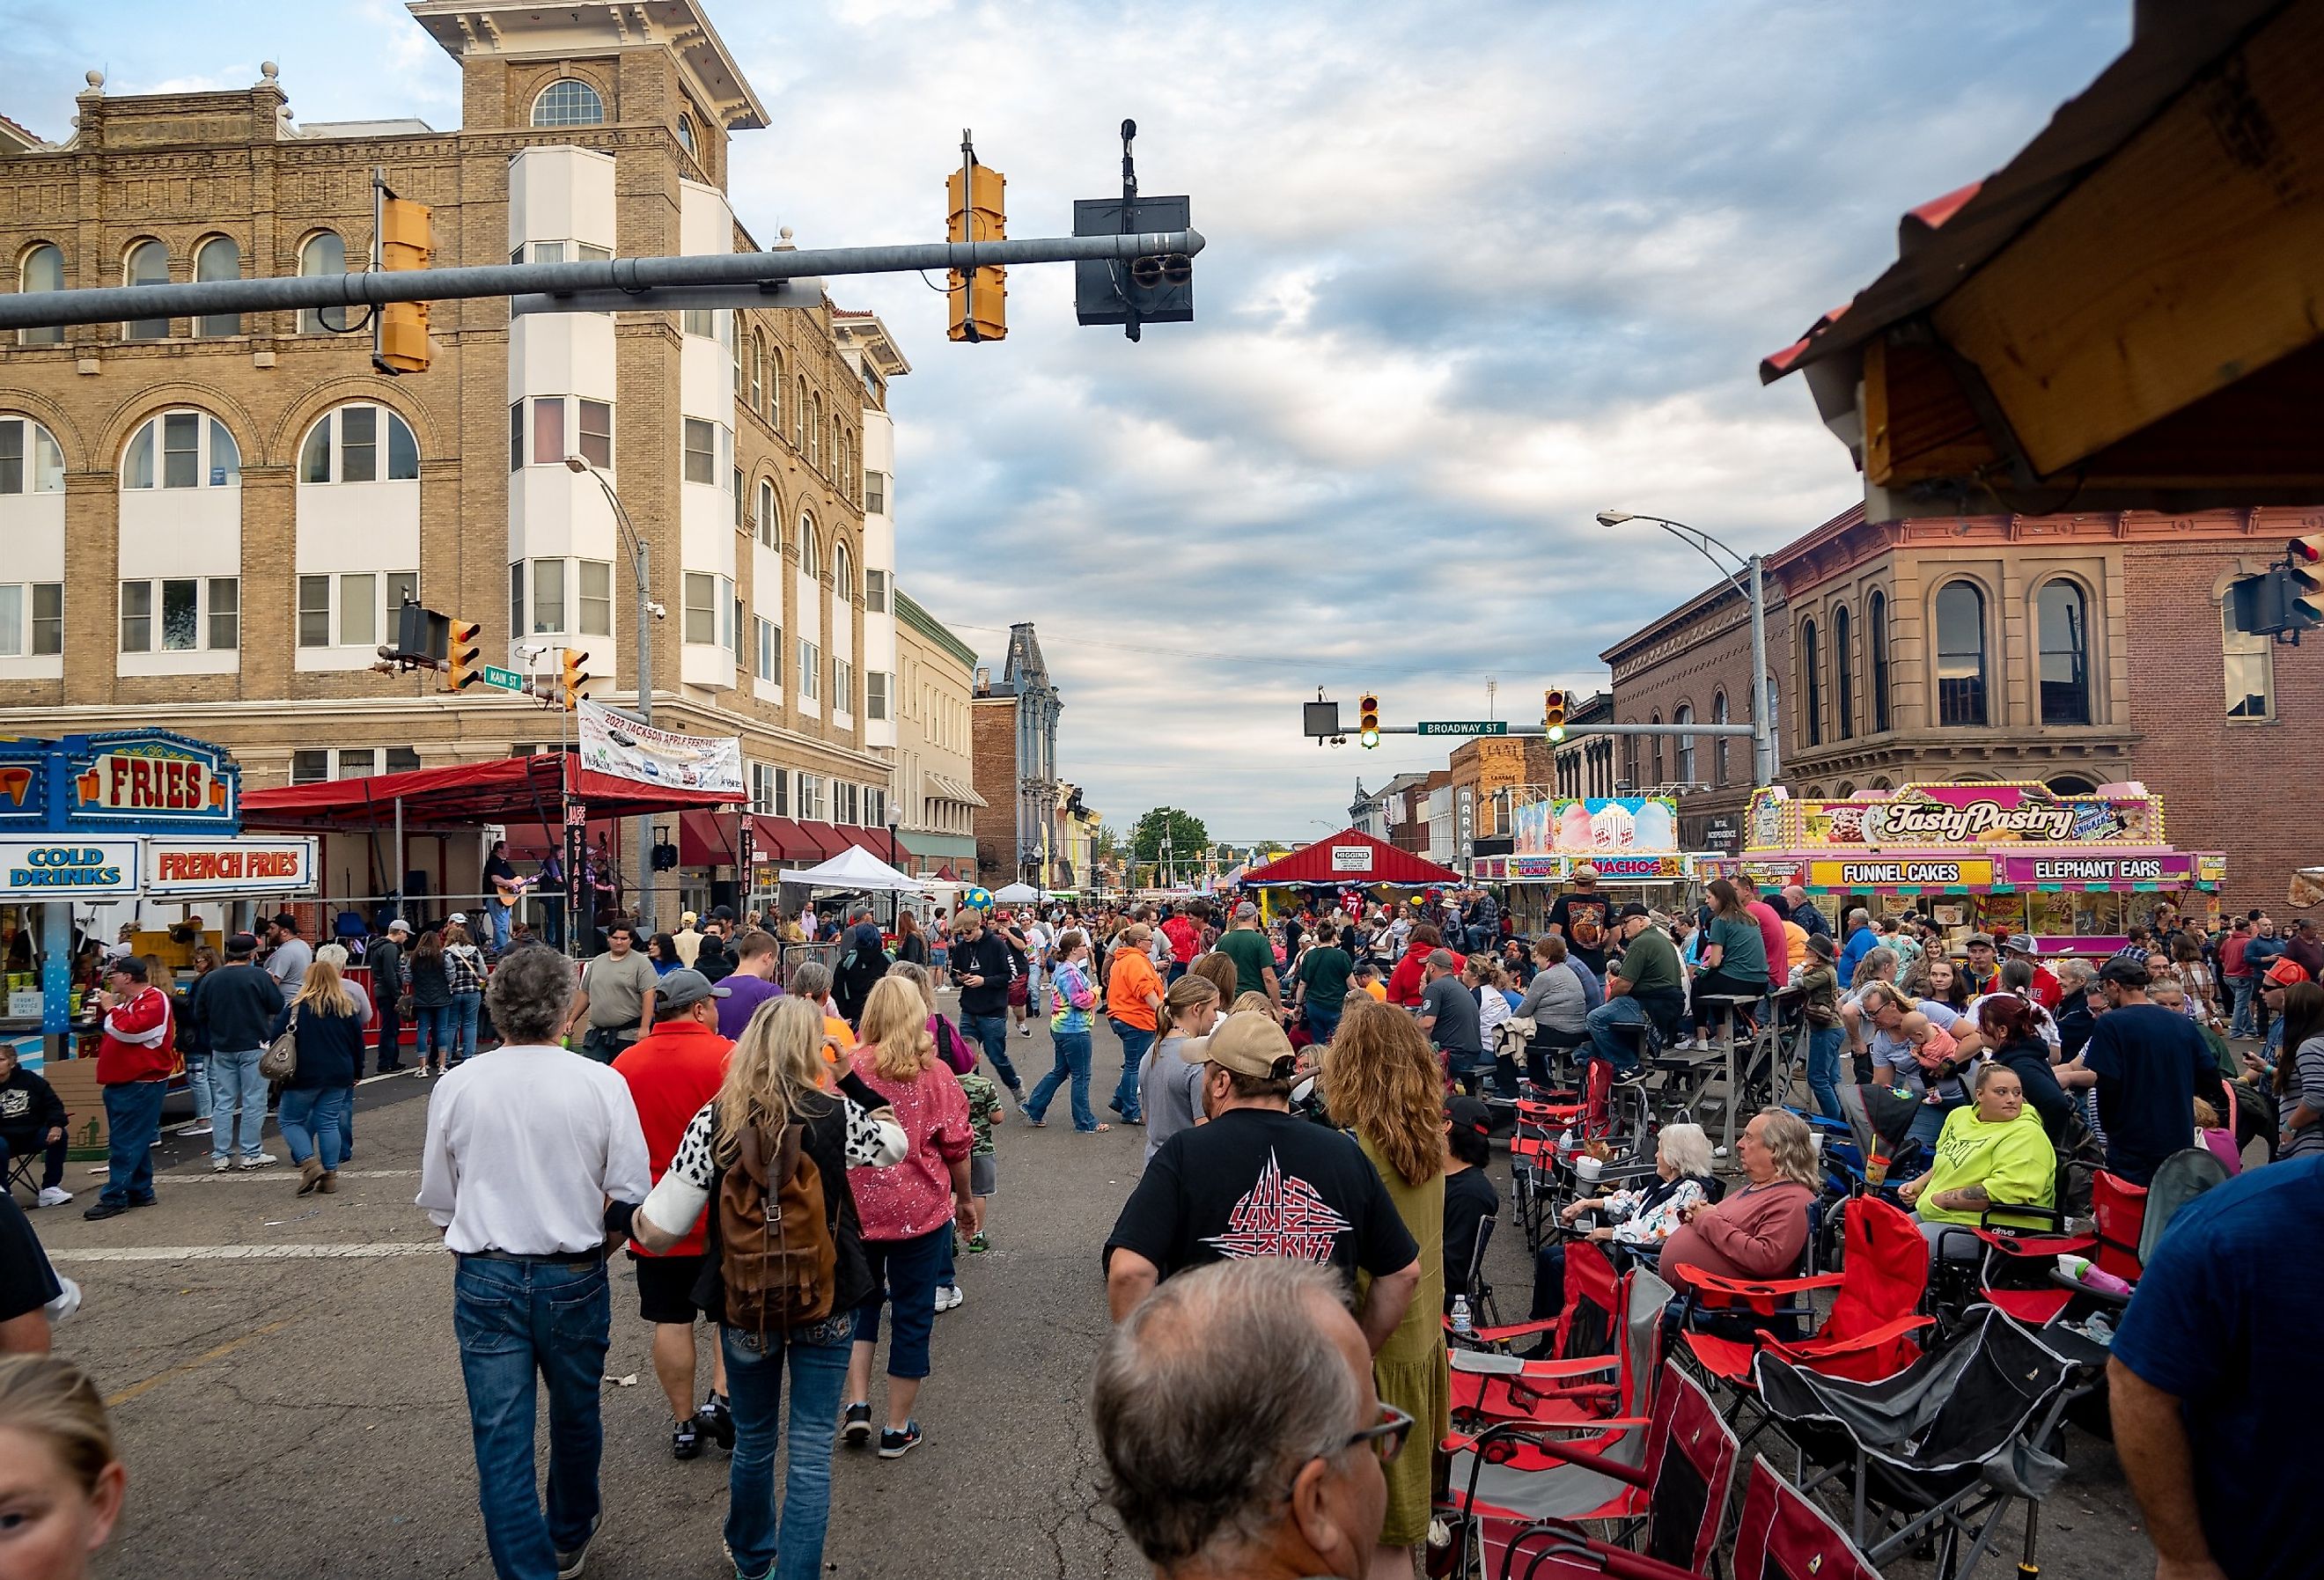 Streets of Jackson, Ohio, during the 2022 Apple Festival. Image credit Alyse Capaccio via Shutterstock